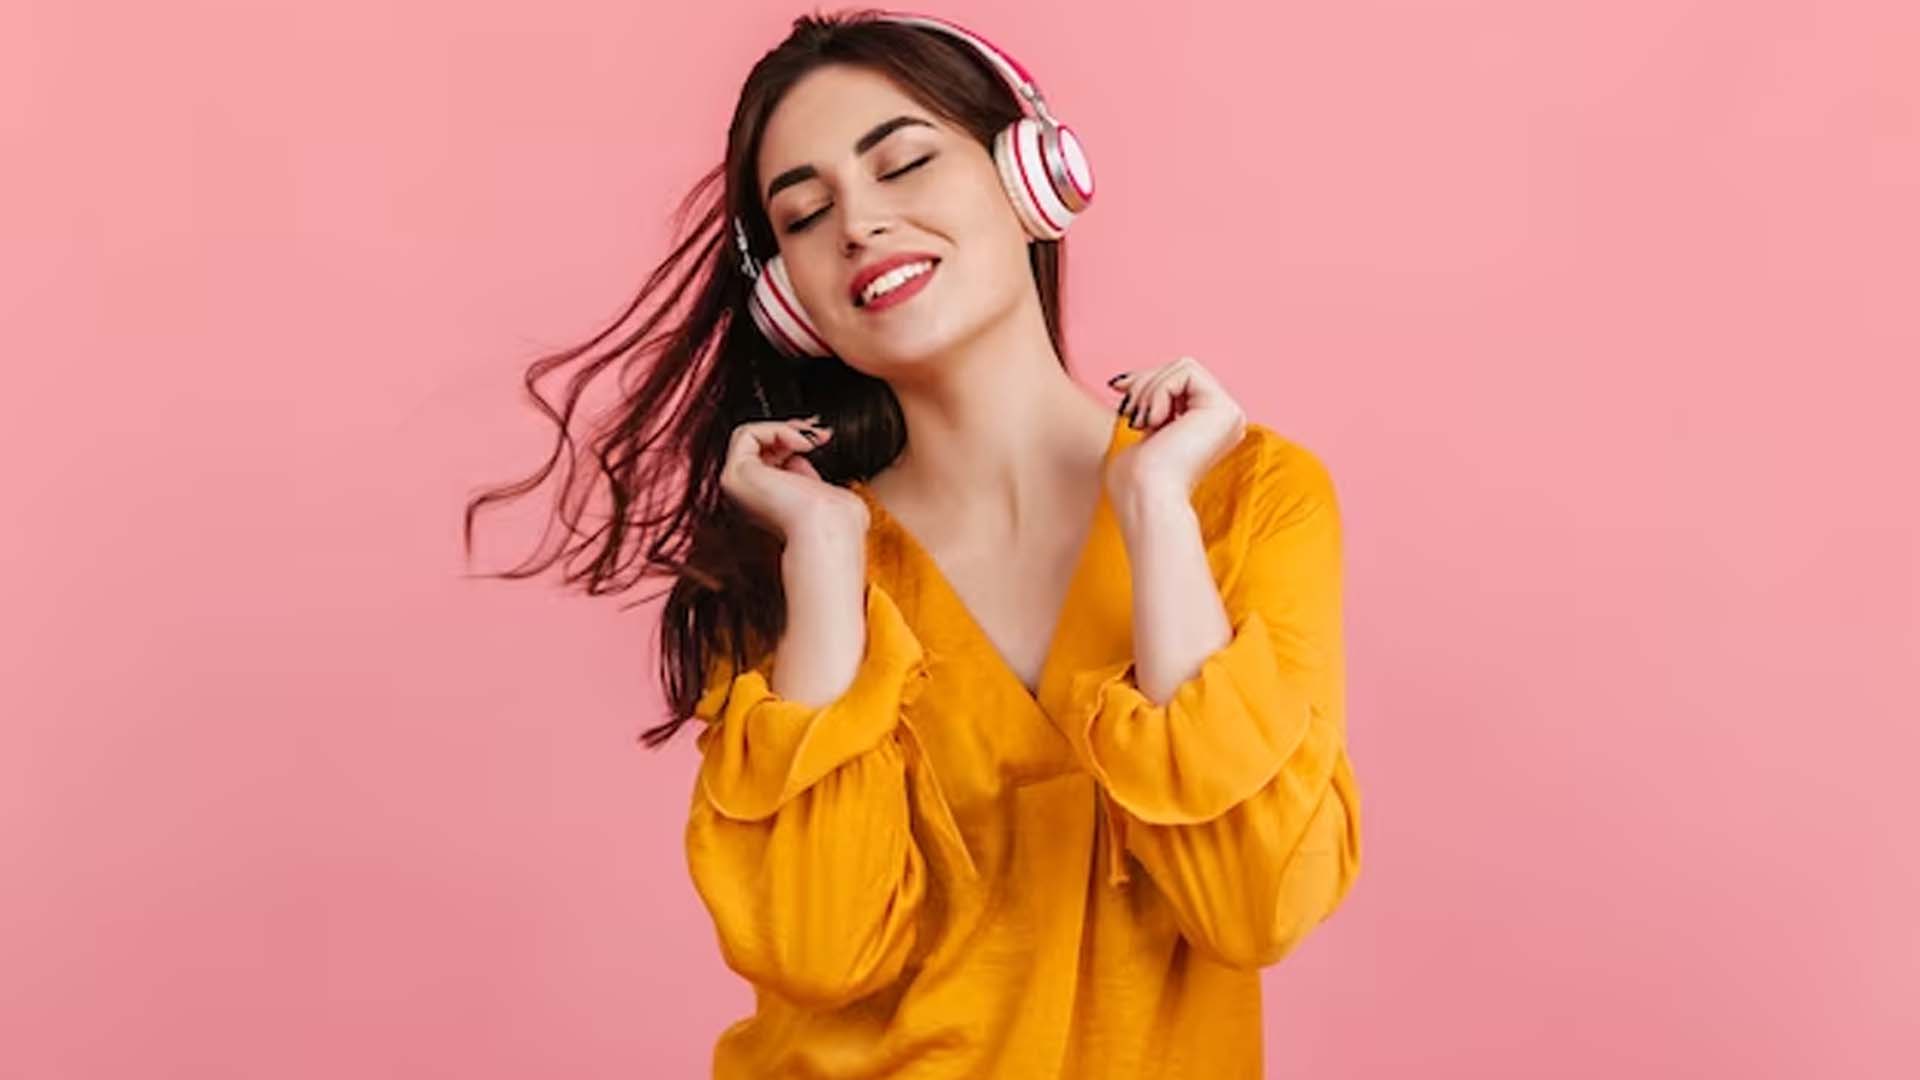 Women Wearing Headphones and Enjoying the Music